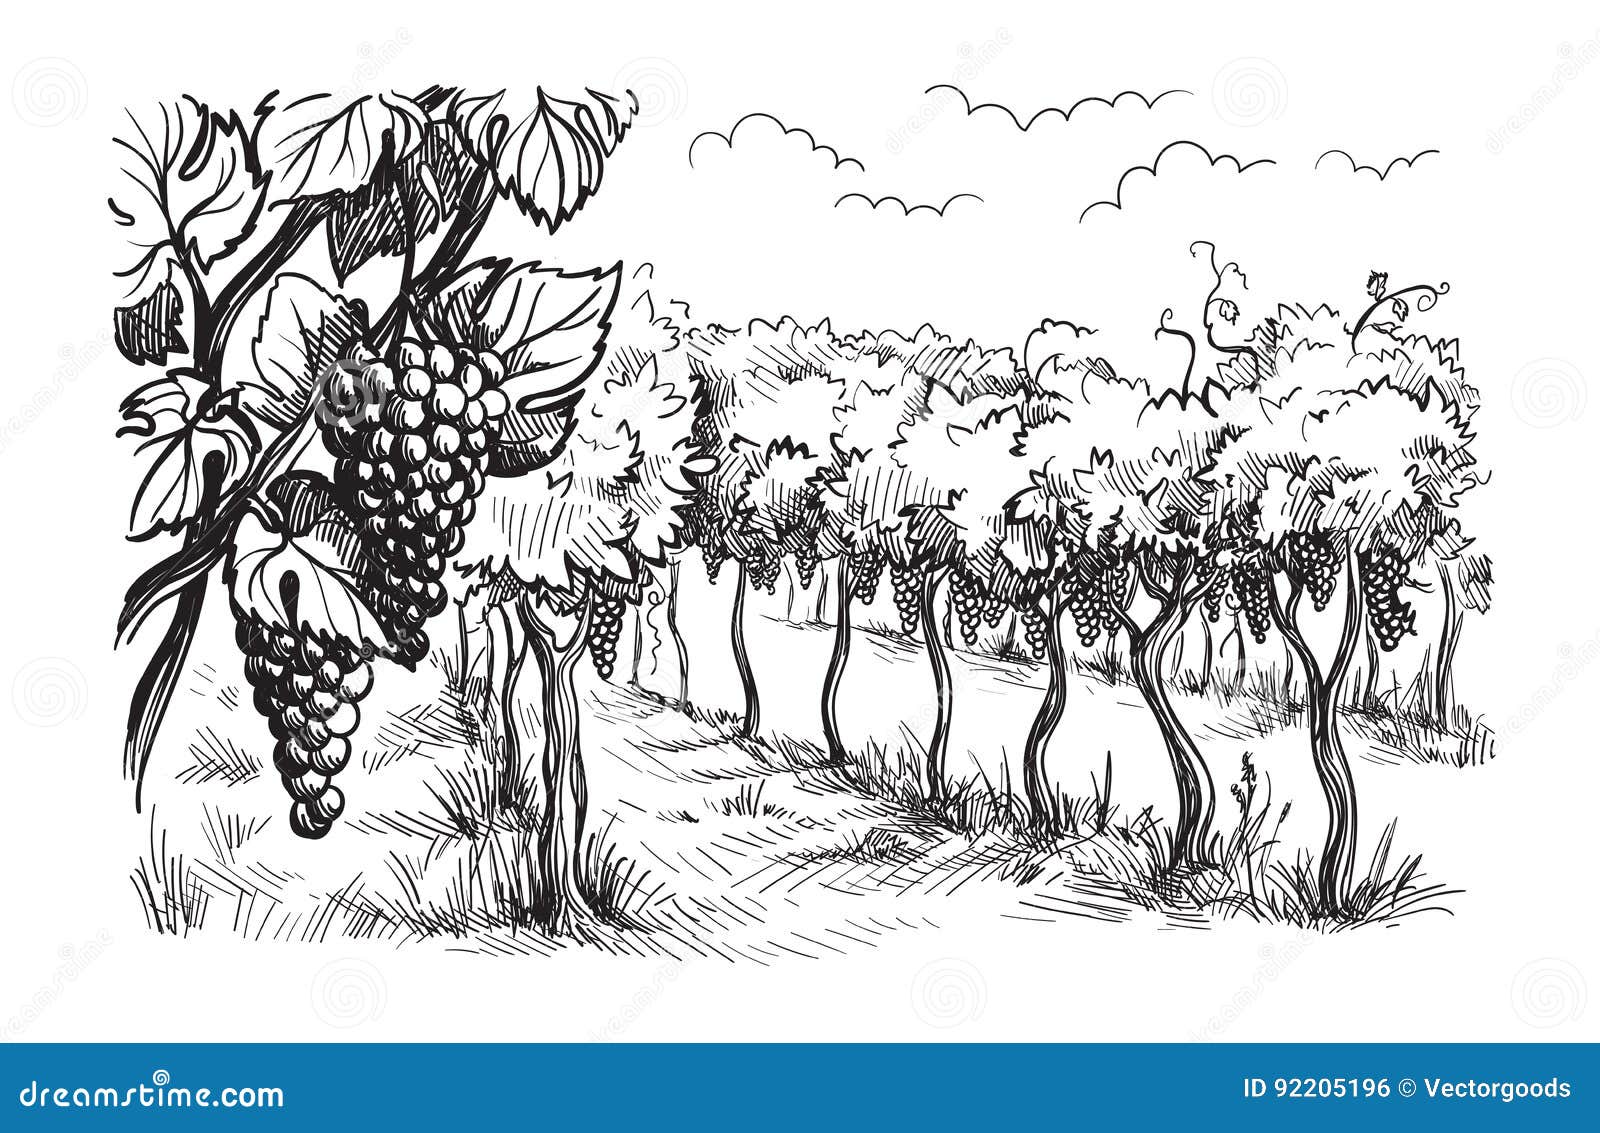 rows of vineyard grape plants